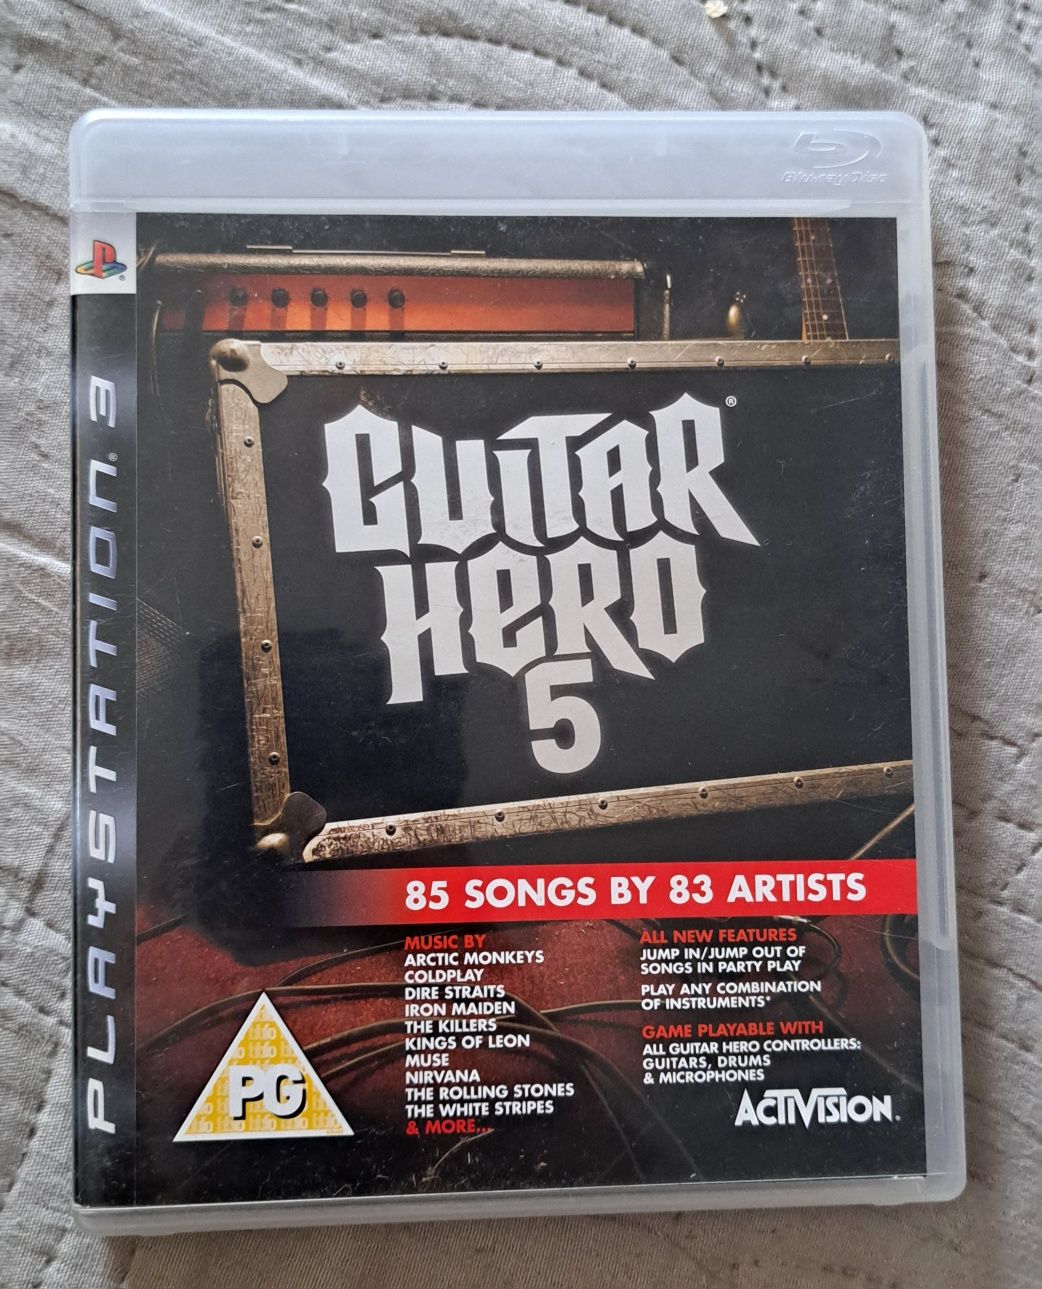 Gra na PS 3 konsole Sony GUITAR HERO 5